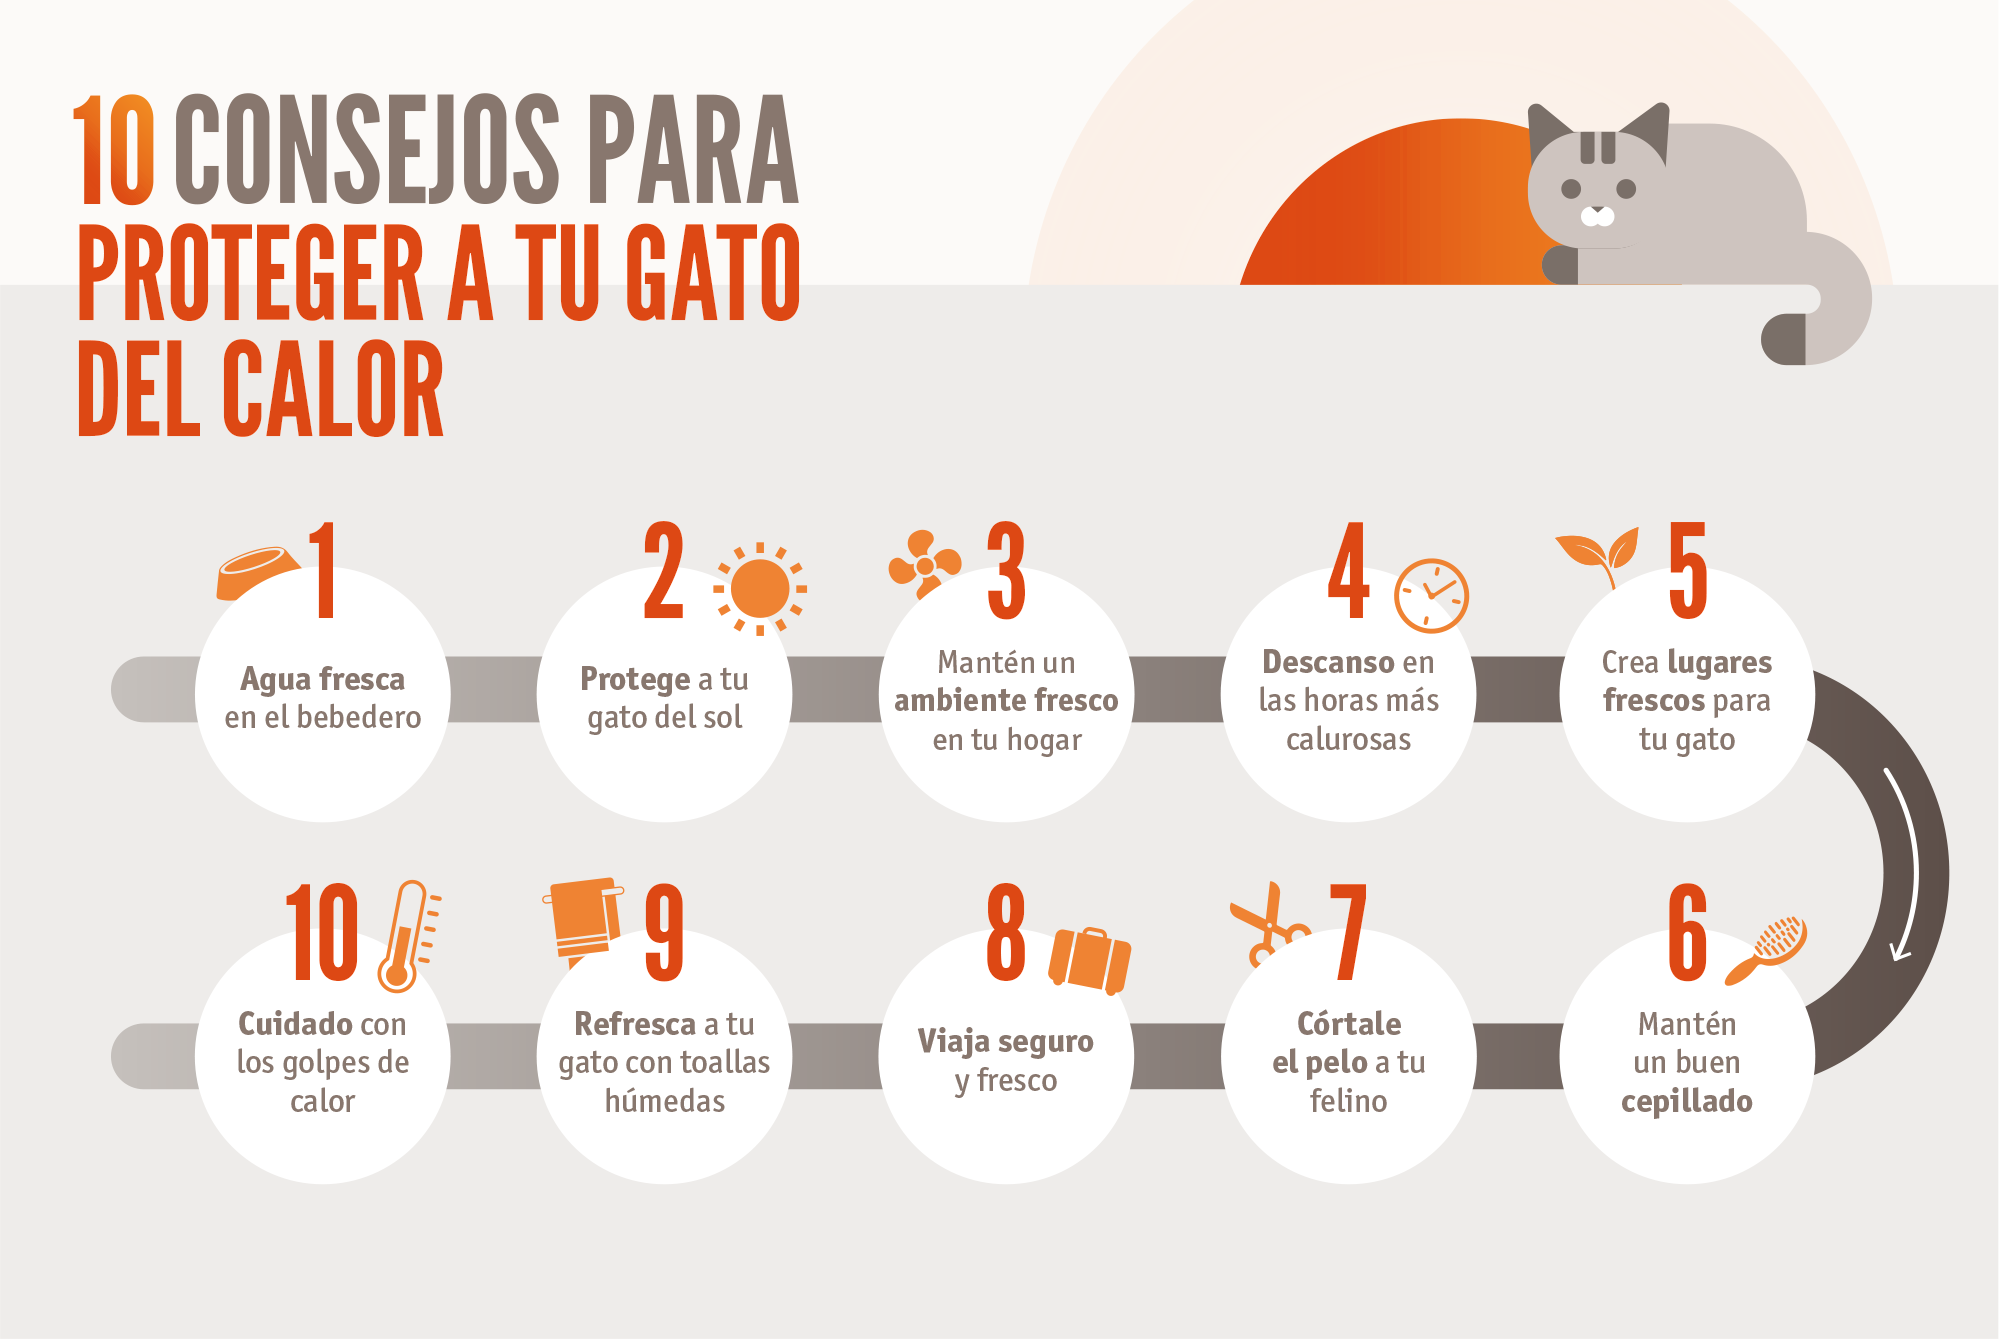 10 consejos para proteger a tu gato del calor